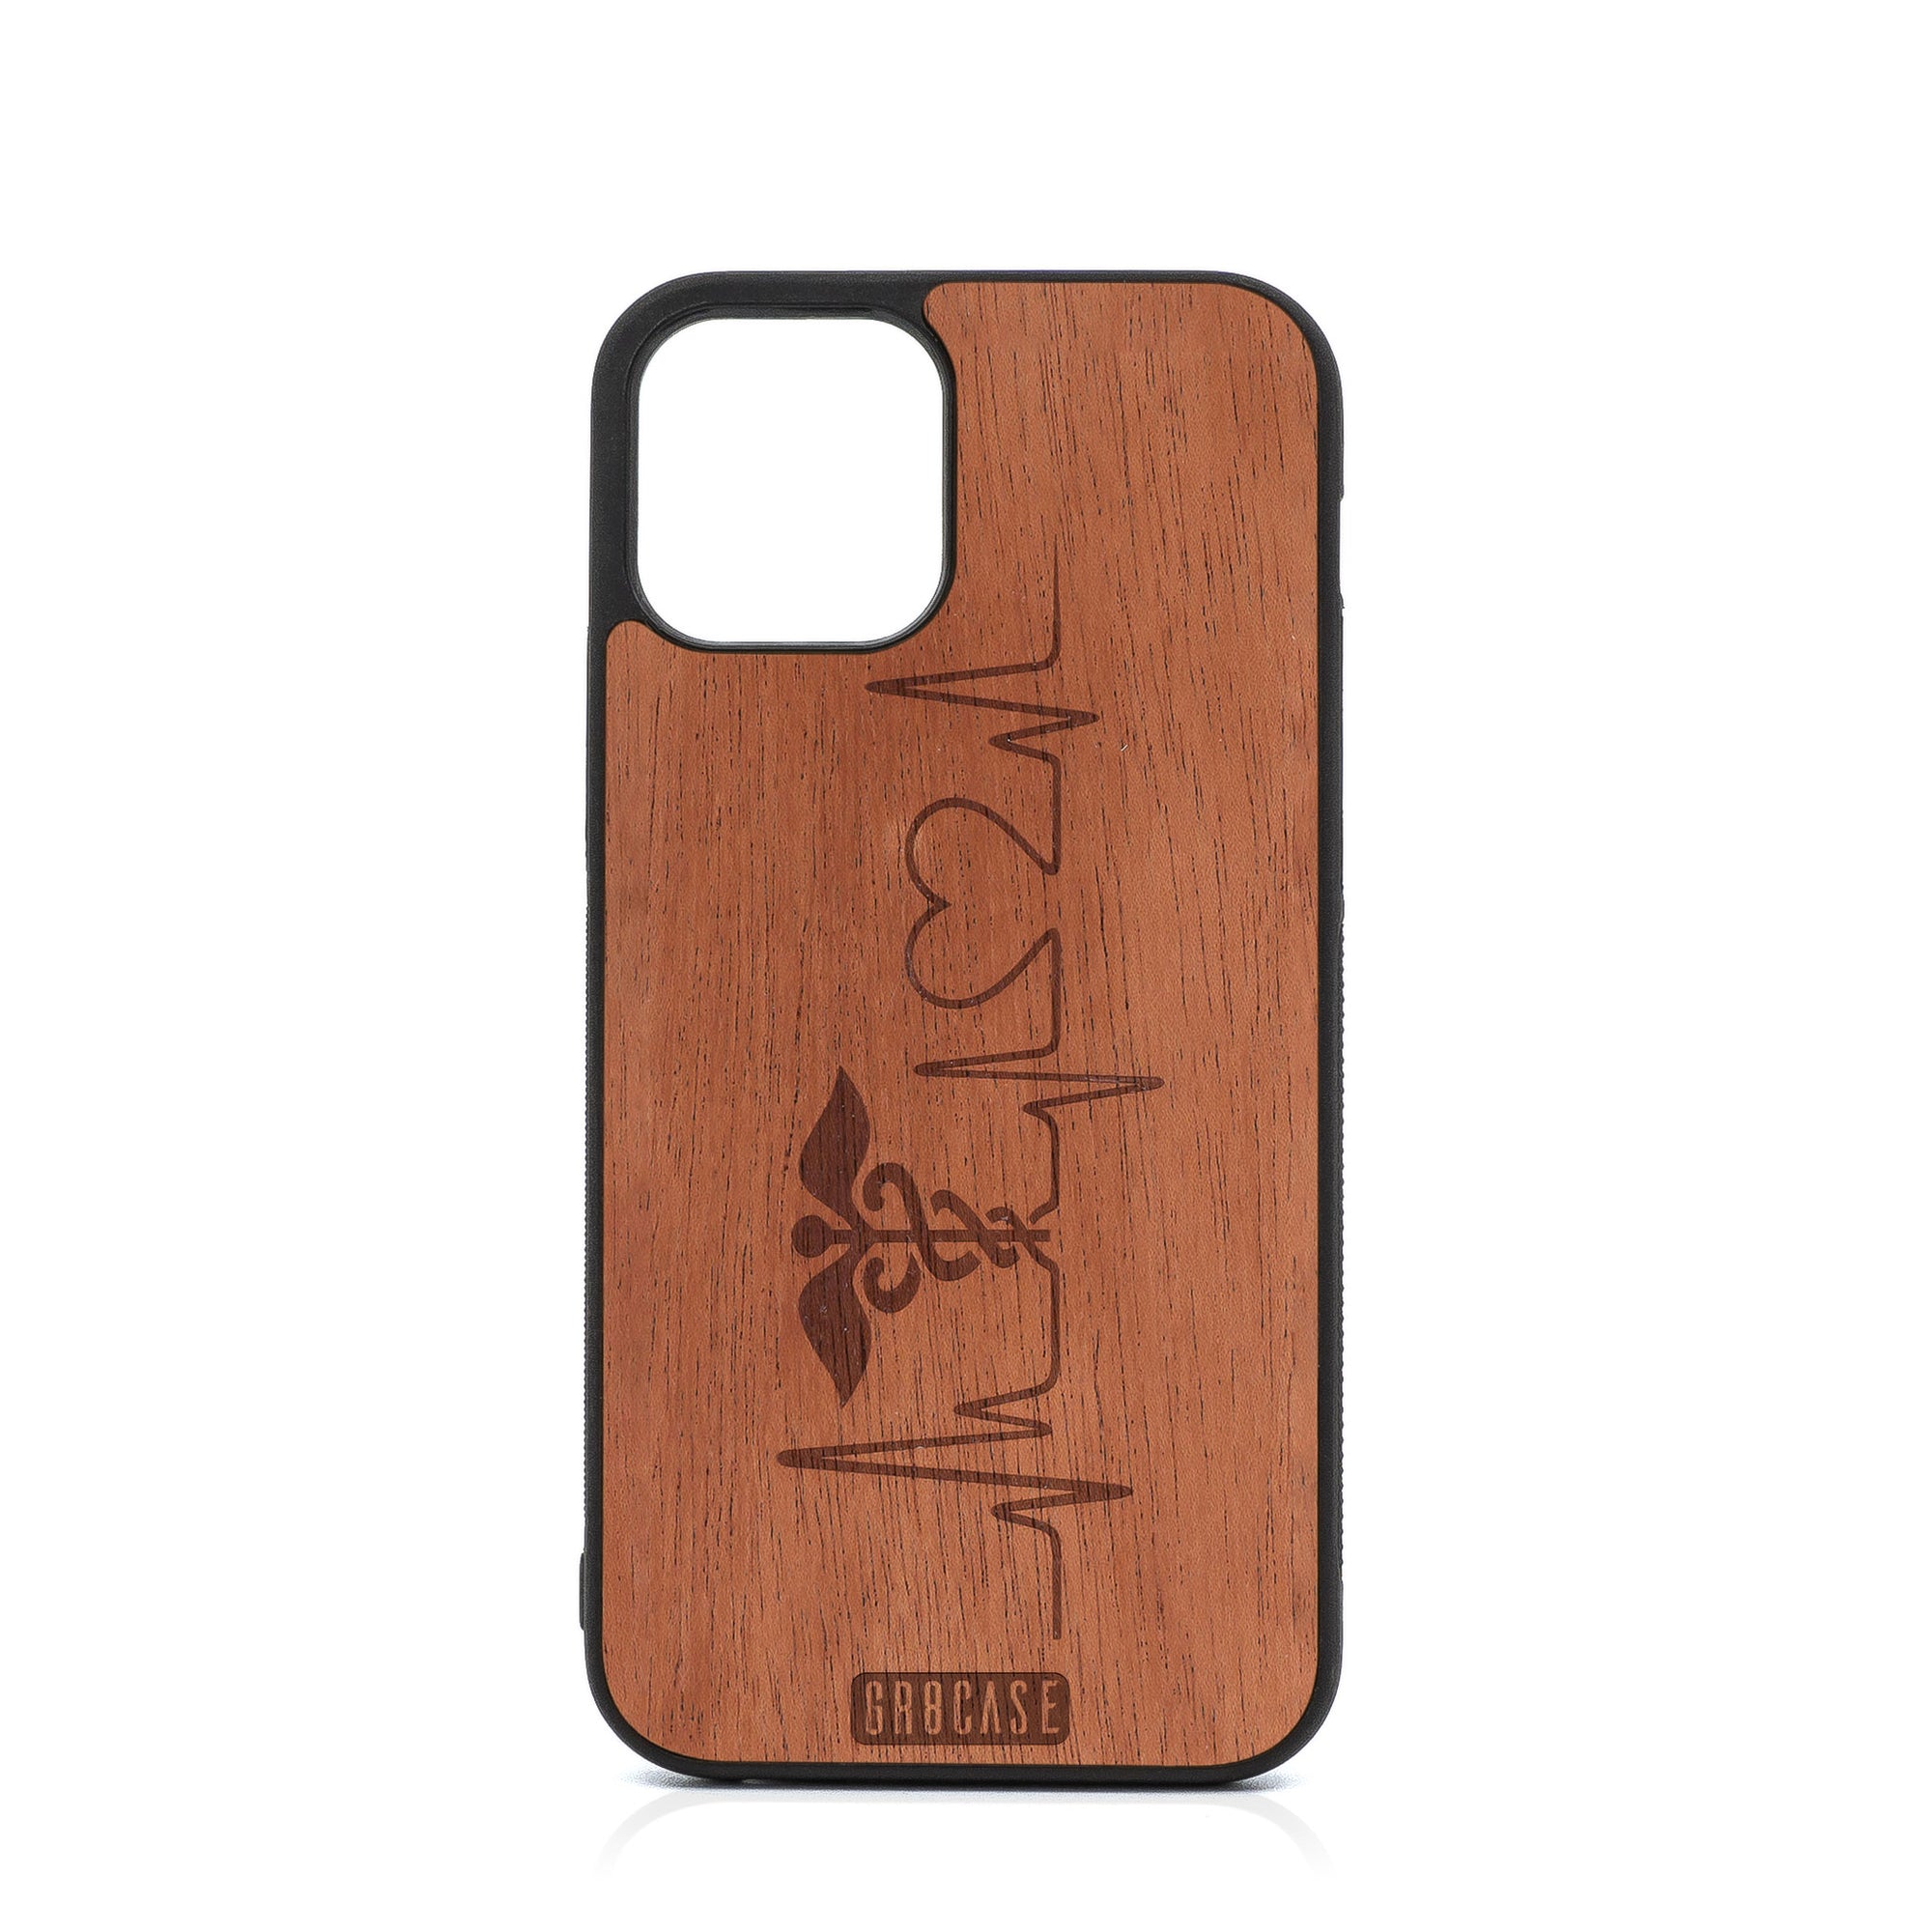 Hero's Heart (Nurse, Doctor) Theme Design Wood Case For iPhone 12 Pro